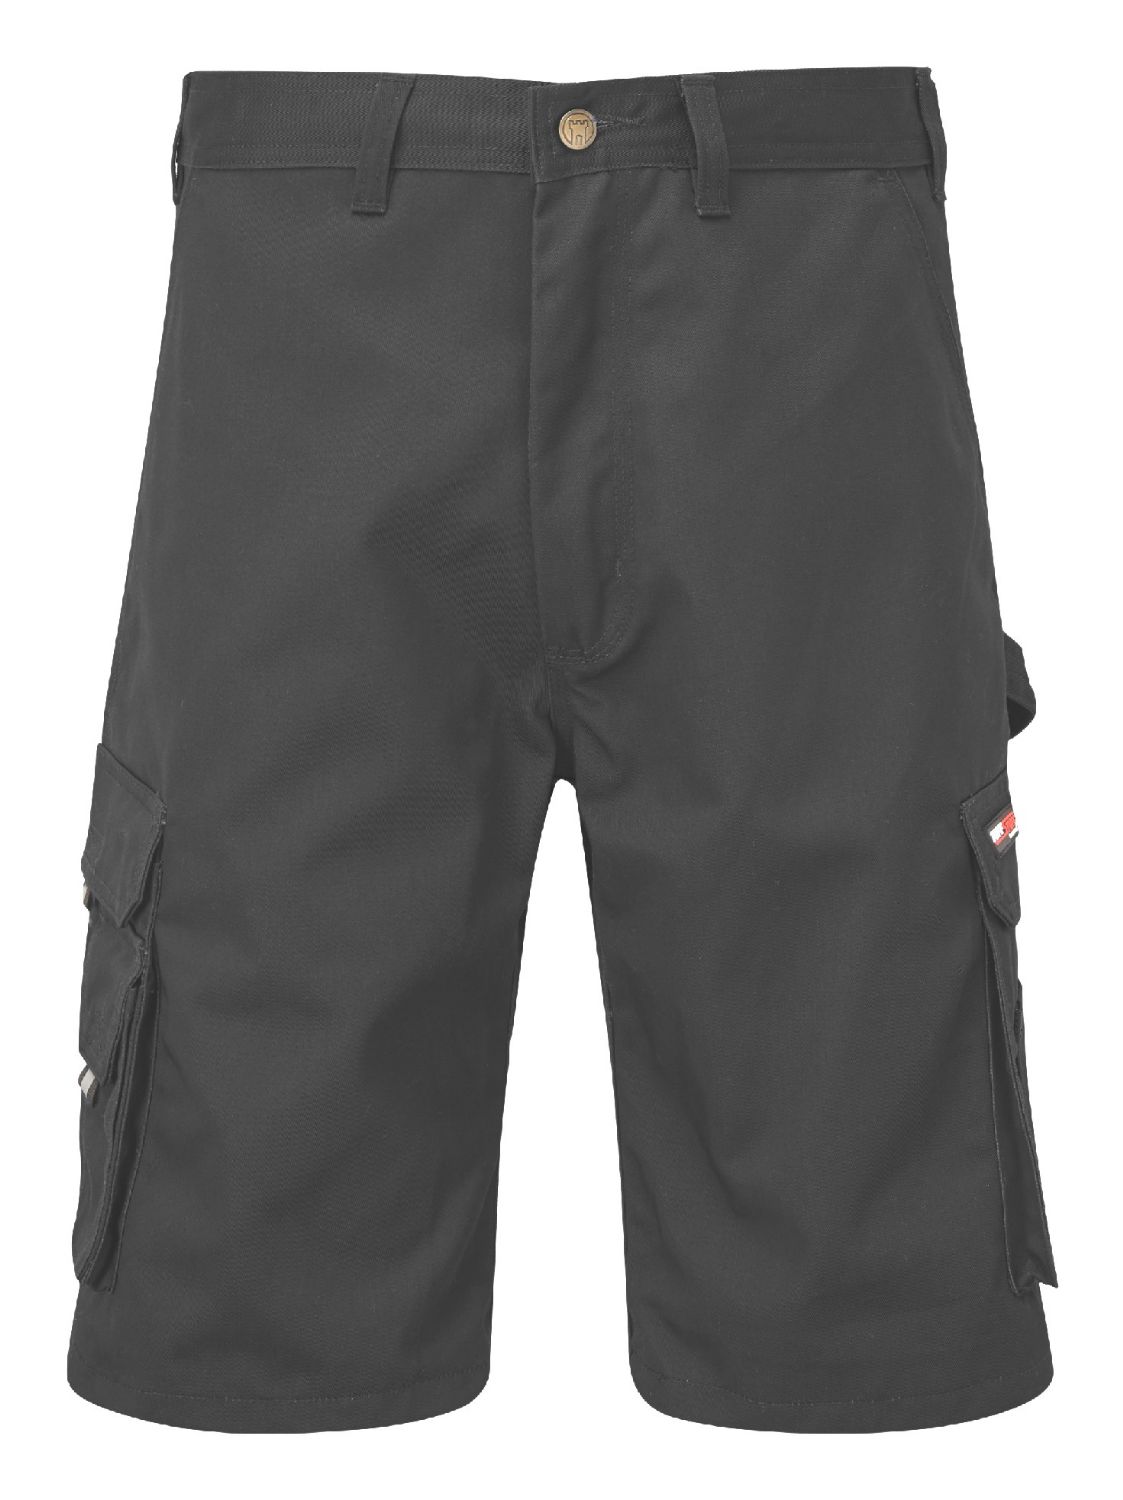 Tuffstuff Shorts 811 Black size 34